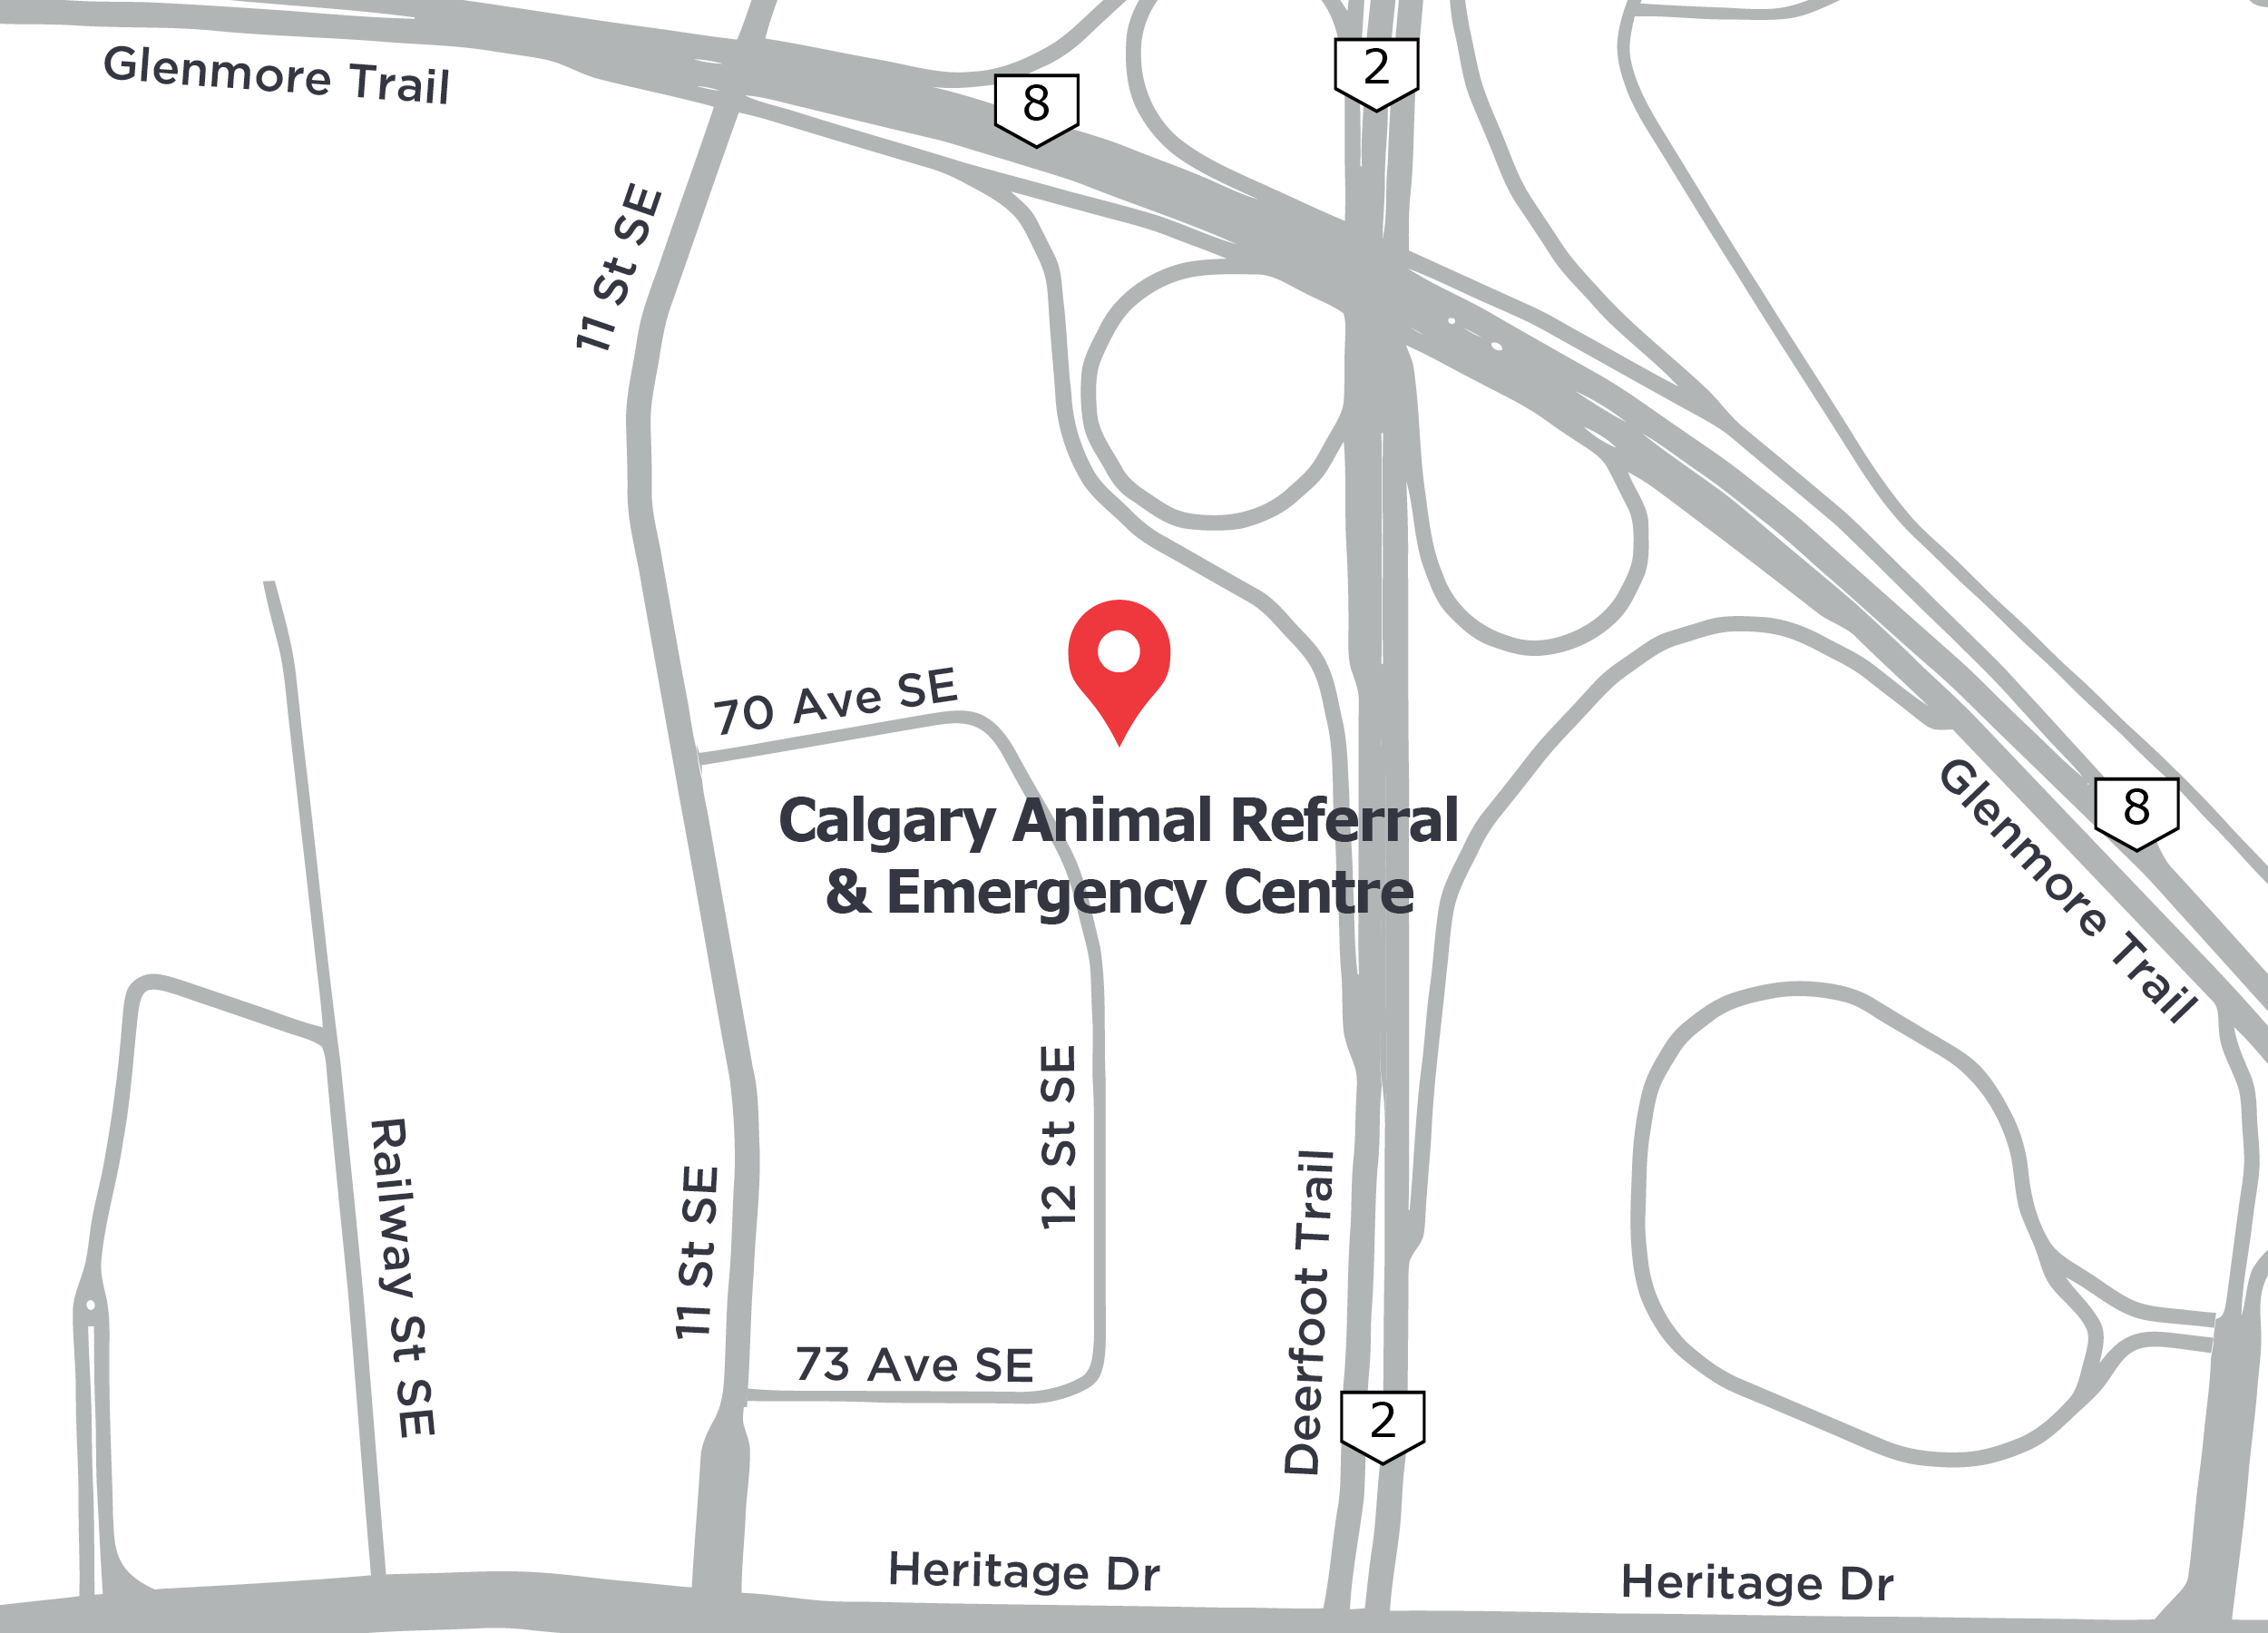 Calgary Animal Referral & Emergency Centre